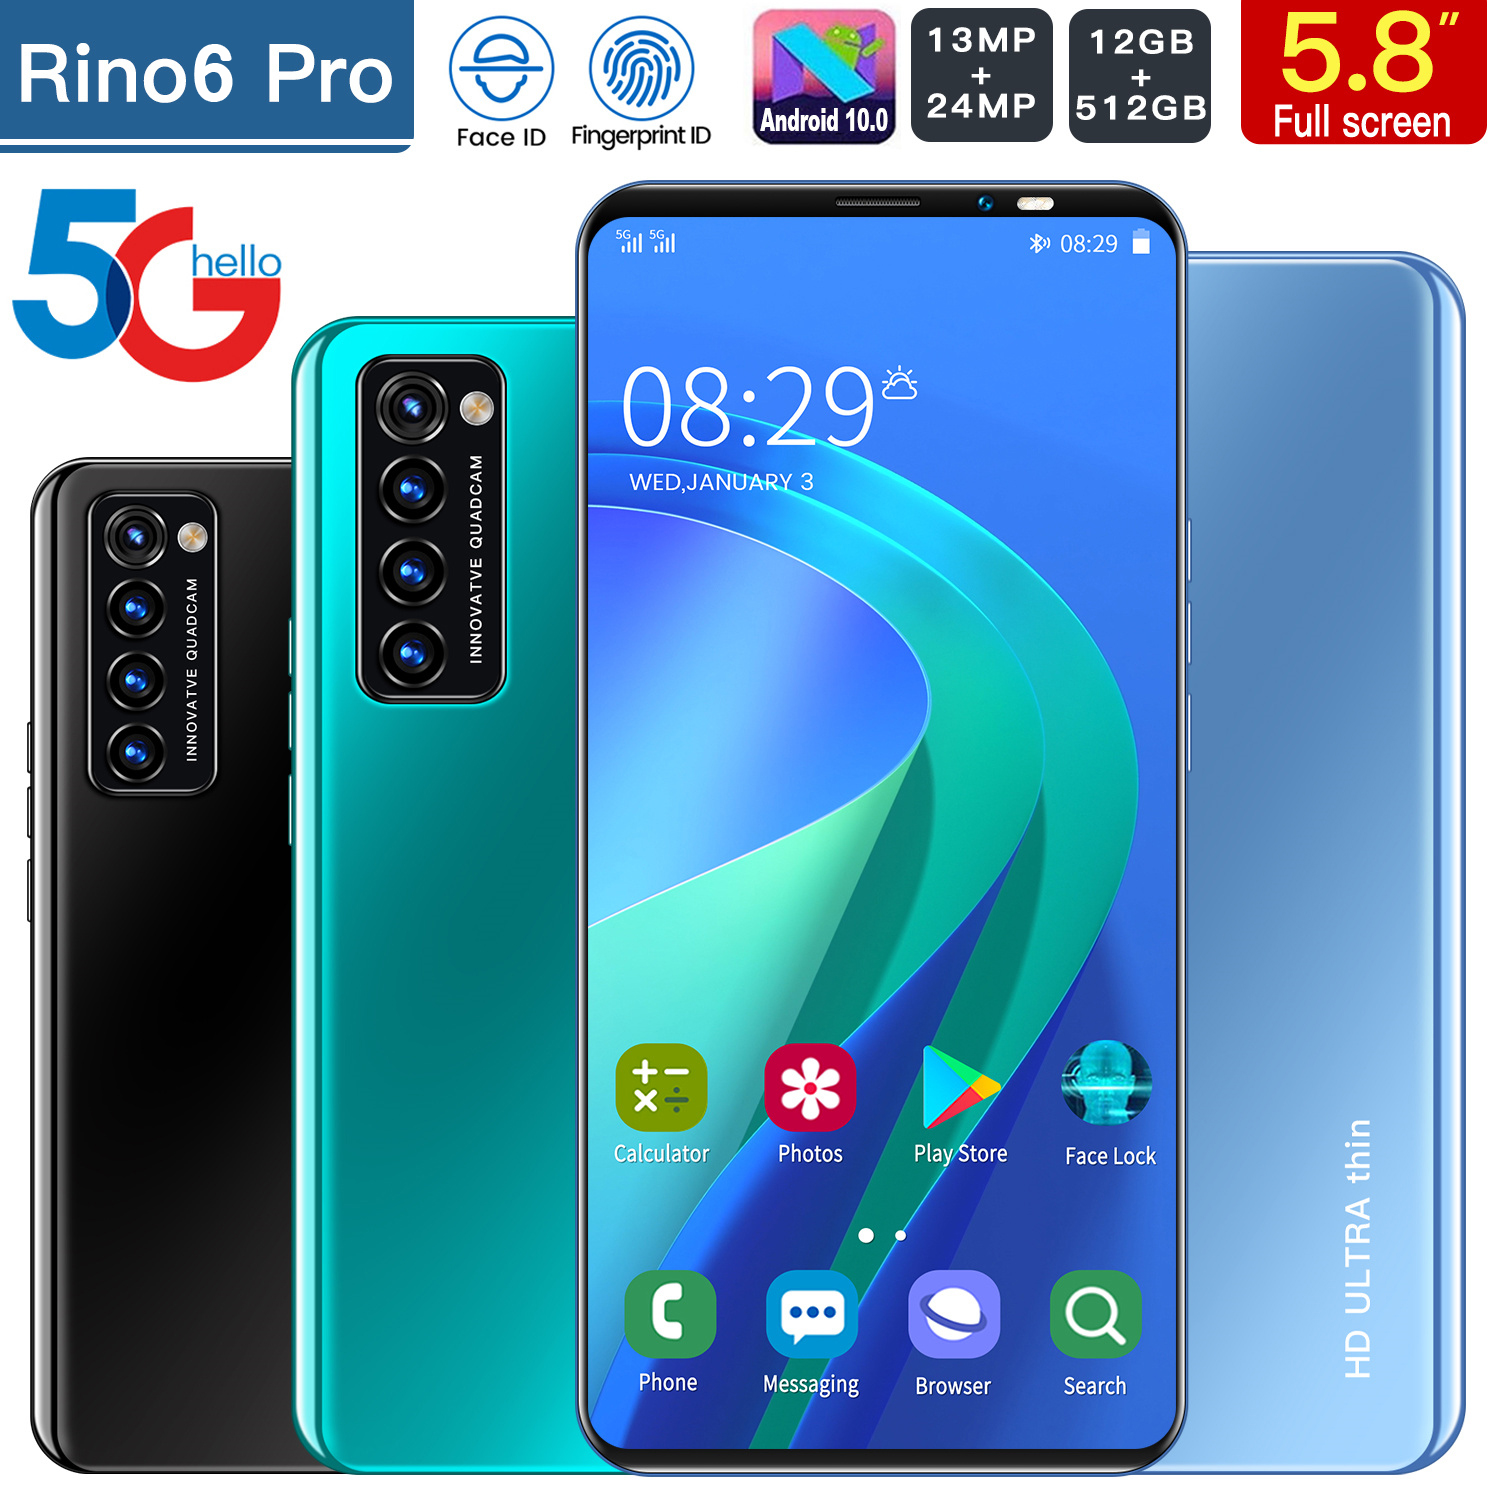 oppo 2021 ของแท้ 100% ราคาถูกโทรศัพท์มือถือ Rino6 Pro ราคาถูกโทรศัพท์ Android หน้าจอ HD RAM 128GB รองรับเครือข่าย 4G / 5G โทรศัพท์ถูกๆดี การ์ดคู่ Thai WiFi touch